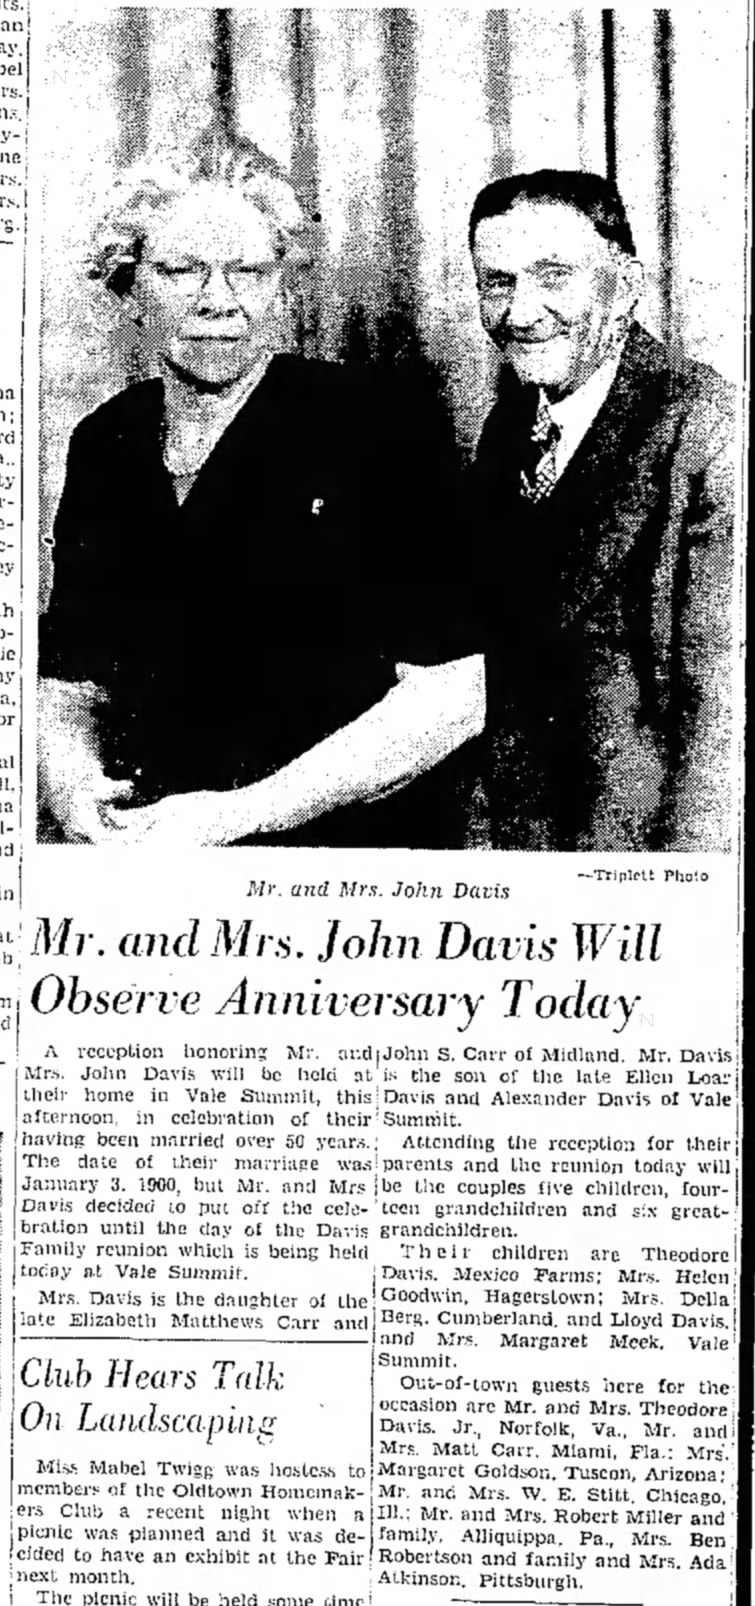 July 2, 1950
50th Wedding anniversary
Mr & Mrs John Davis  of Midland, Maryland  